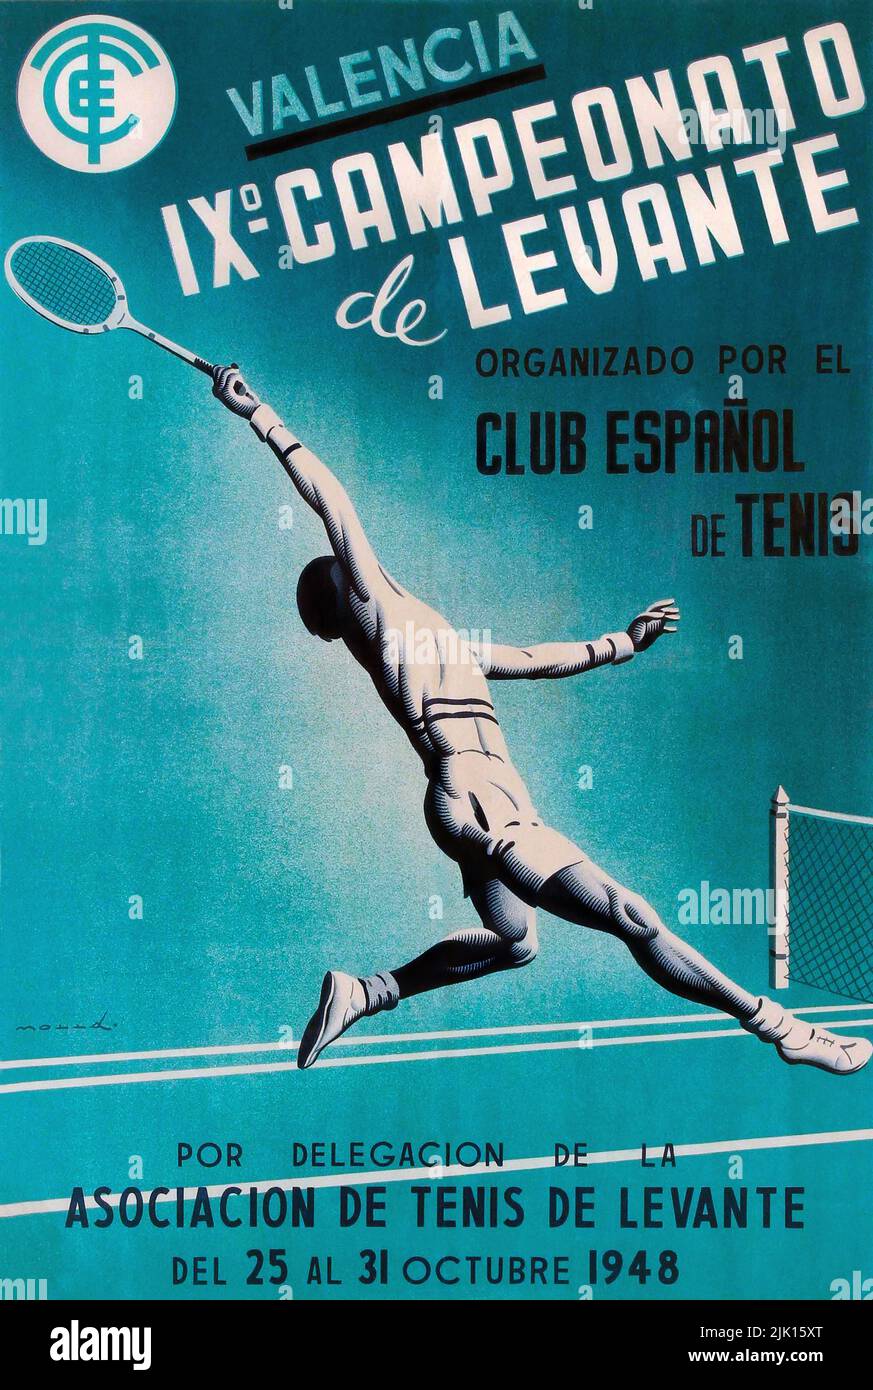 Vintage Sport Poster Valencia Campeonato De Levante Tennis Club Spain 1948 Stock Photo